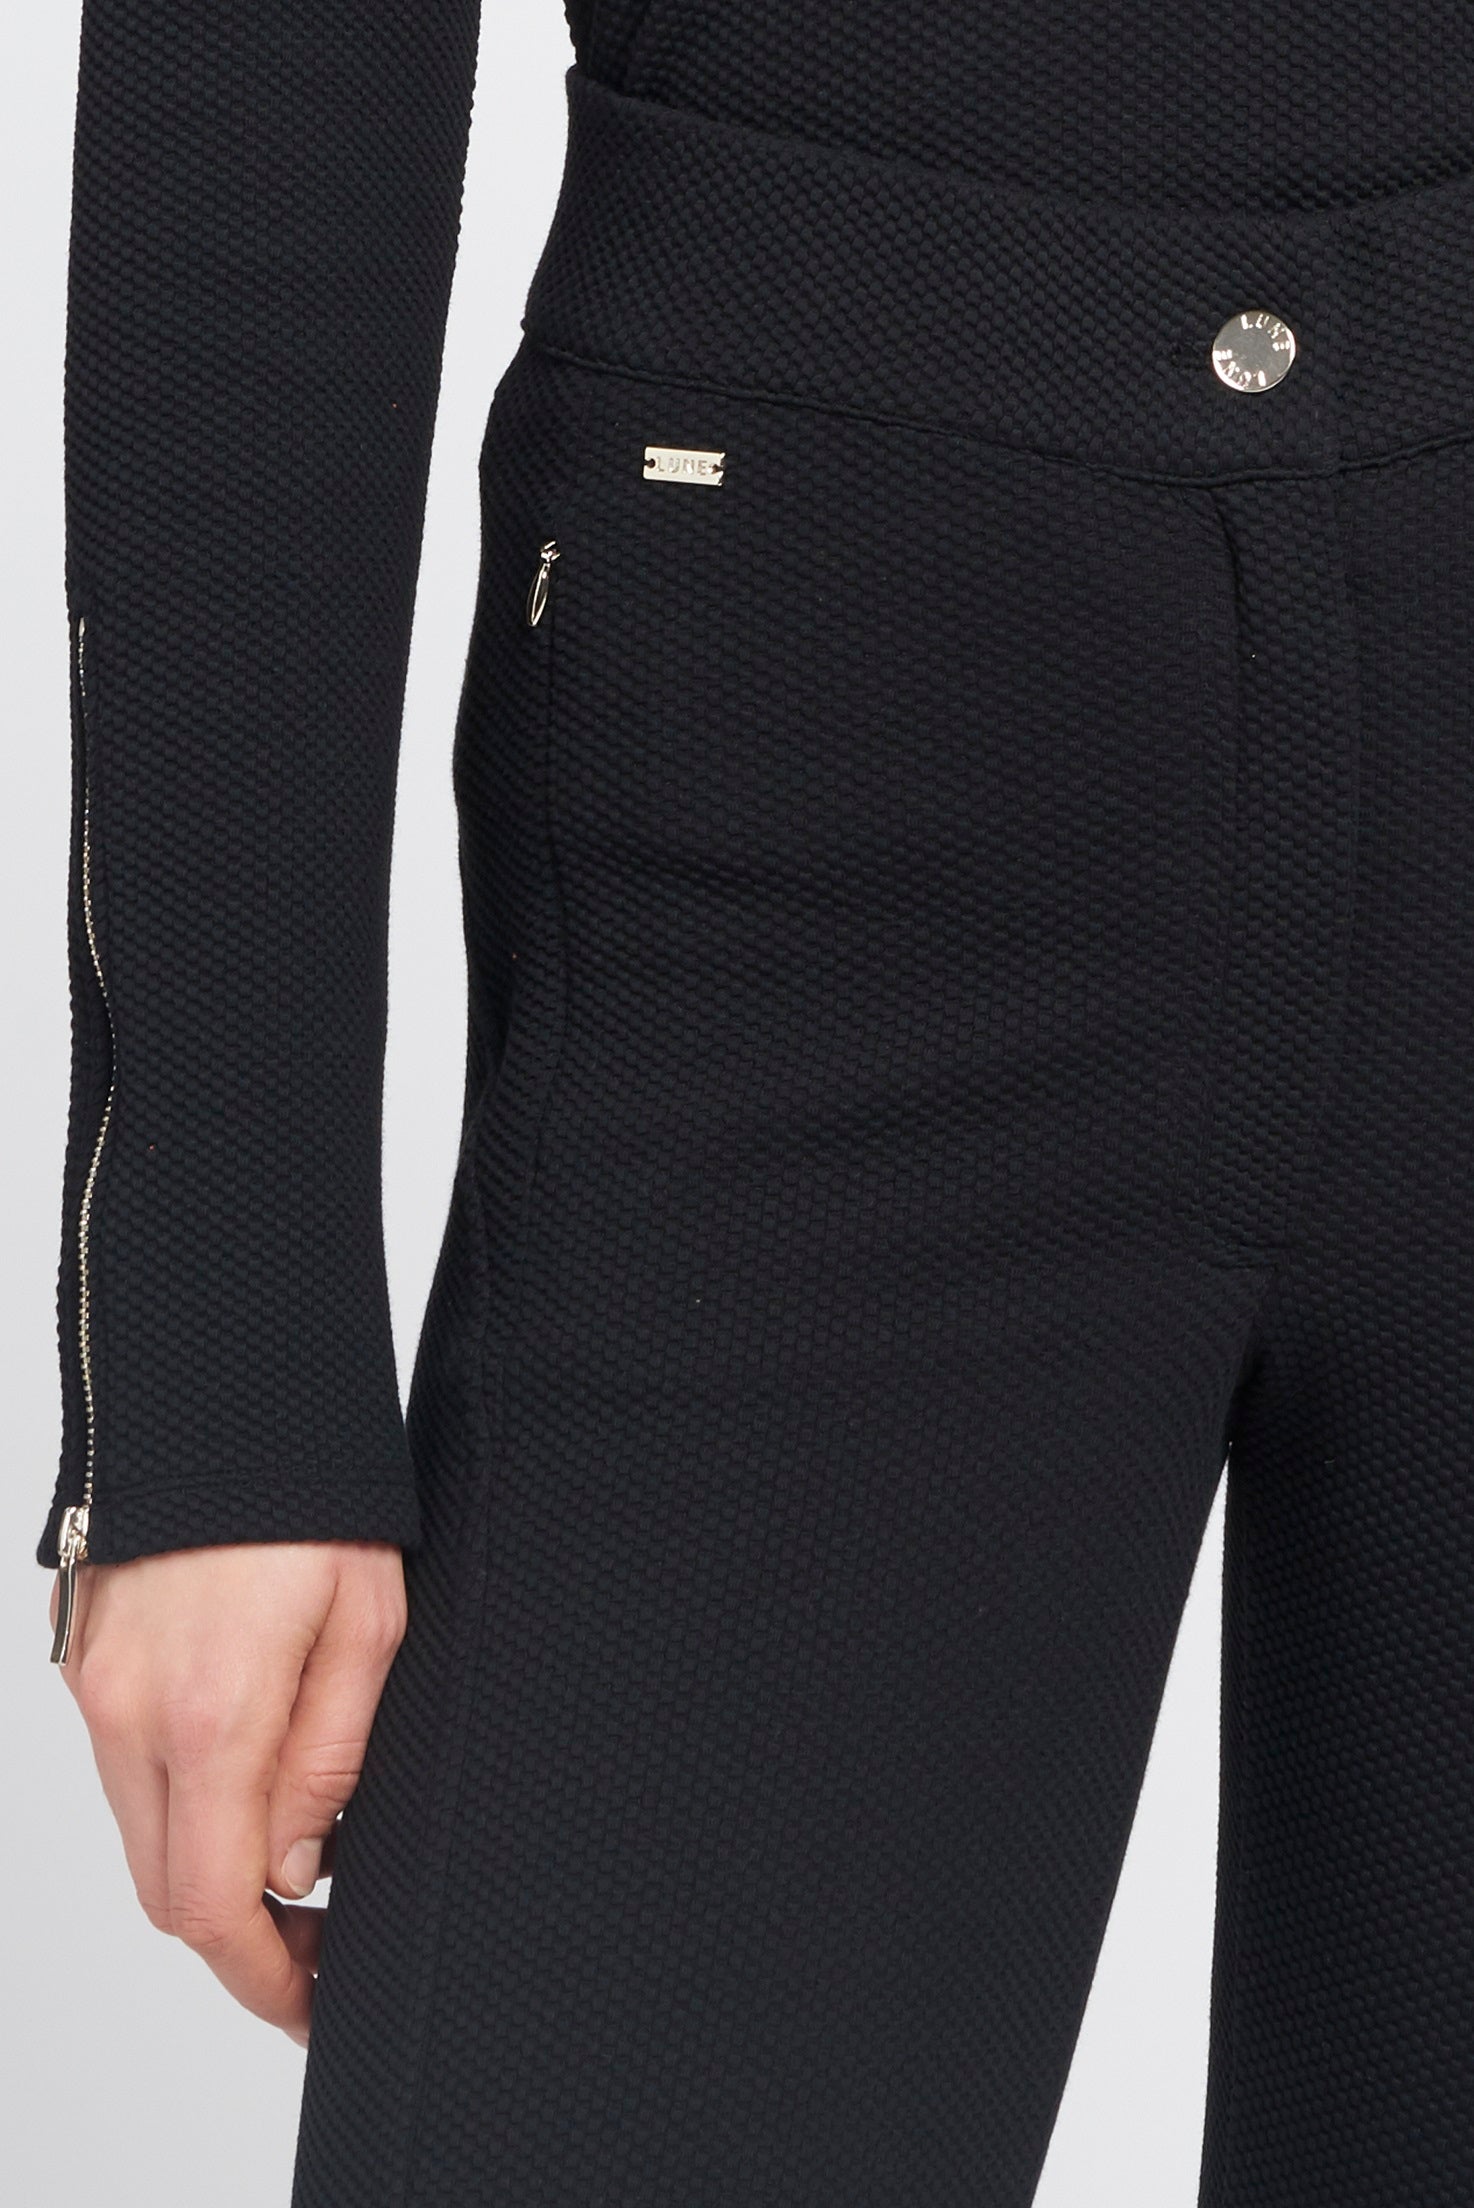 Moon structured slim fit pants - Black